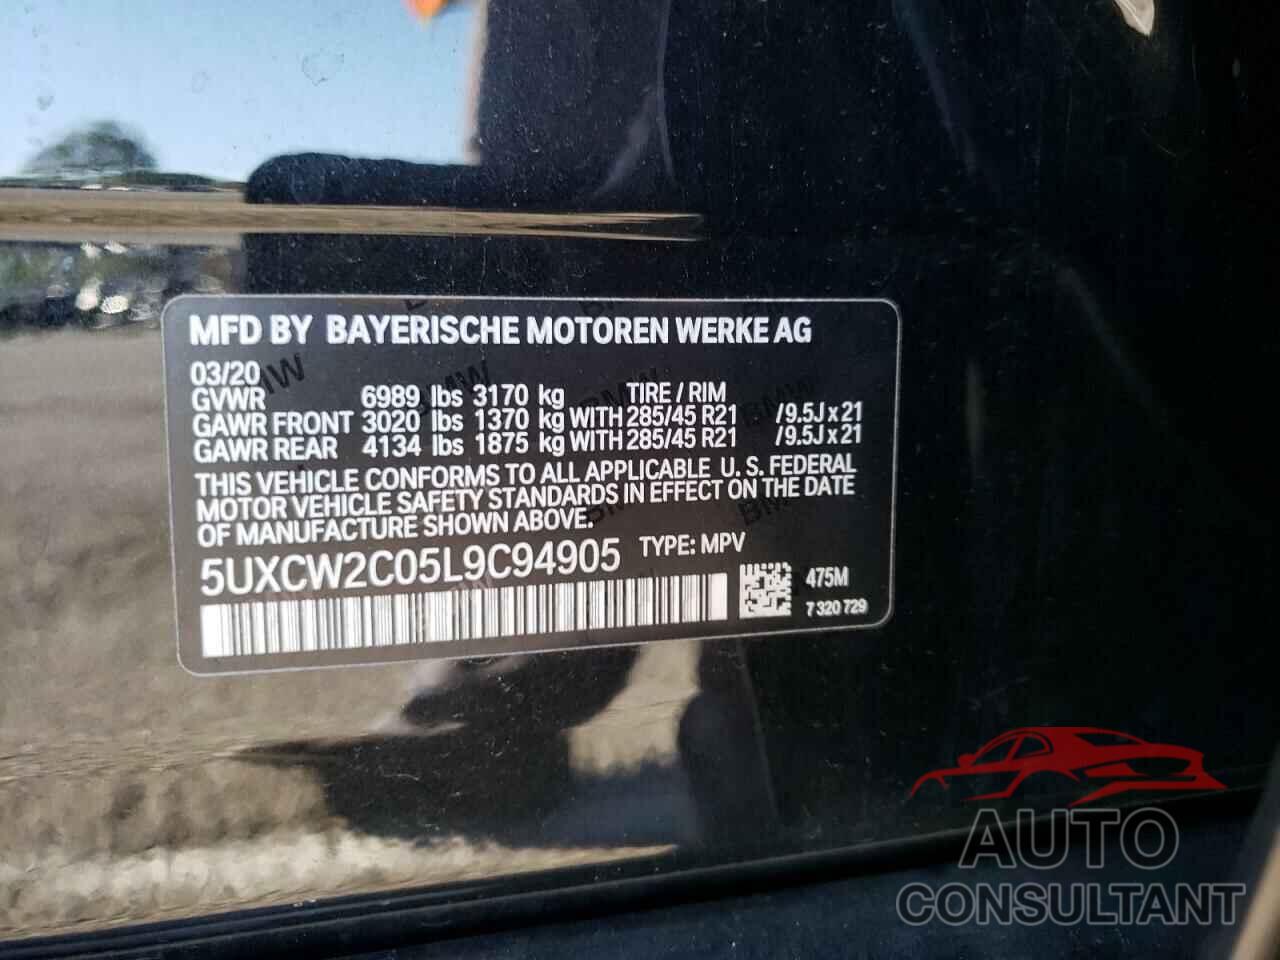 BMW X7 2020 - 5UXCW2C05L9C94905